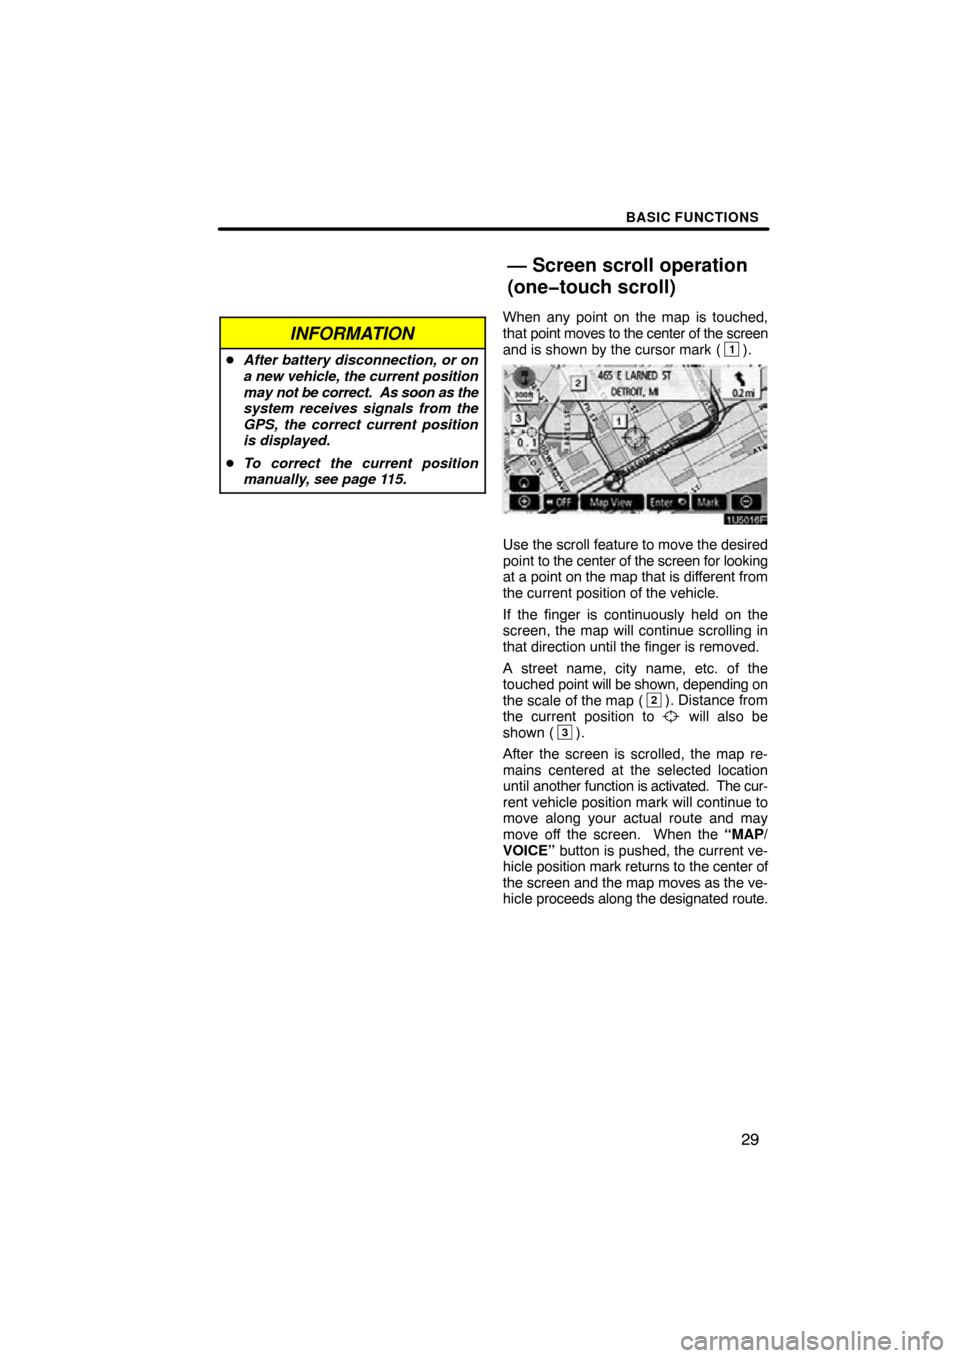 TOYOTA CAMRY 2009 XV40 / 8.G Navigation Manual BASIC FUNCTIONS
29
INFORMATION
After battery disconnection, or on
a new vehicle, the current position
may not be correct.  As soon as the
system receives signals from the
GPS, the correct current pos